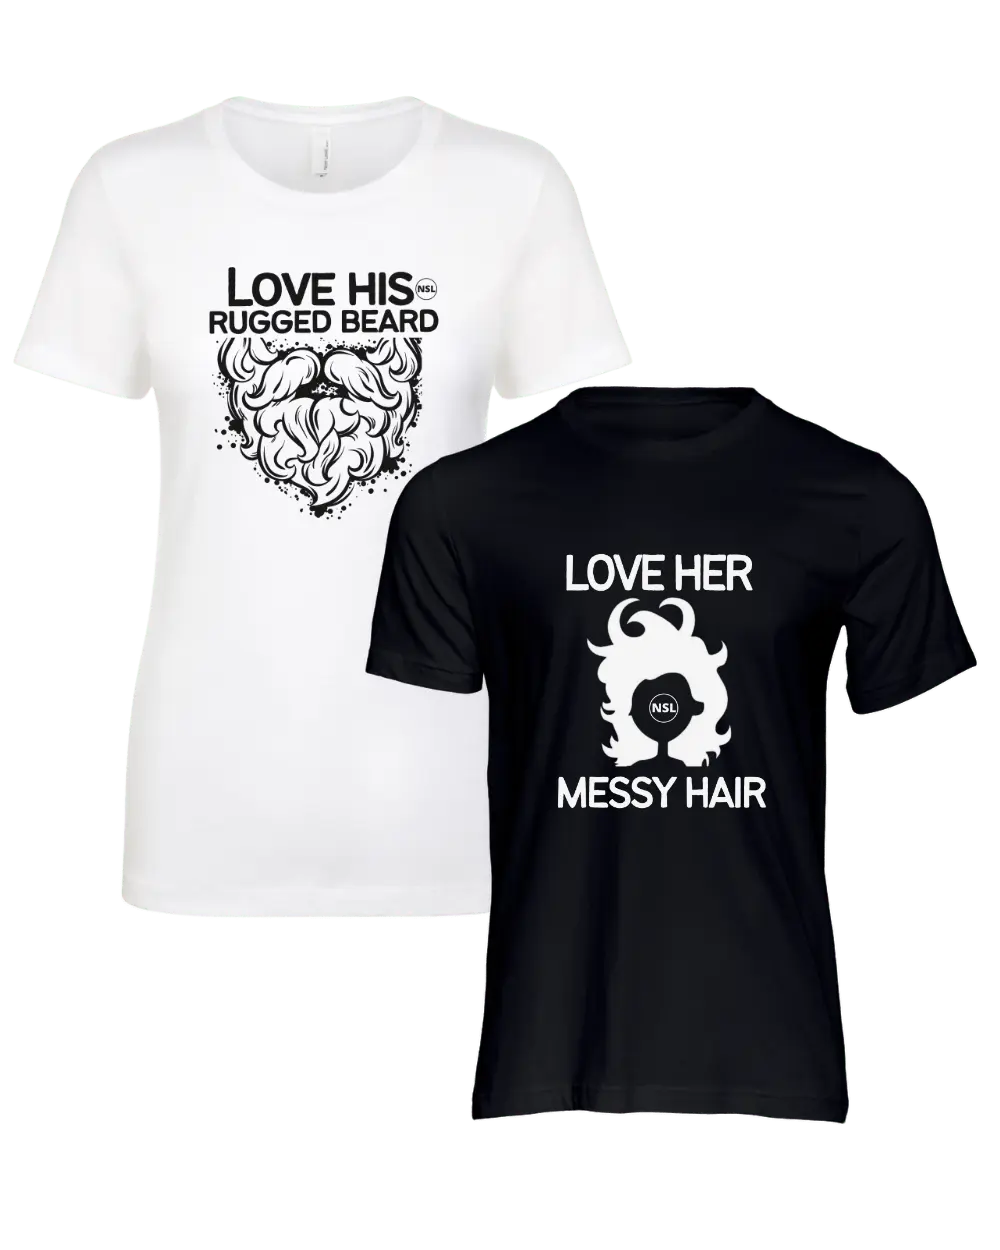 Rugged Beard/Messy Hair Couple T-Shirt|Couple T-shirt